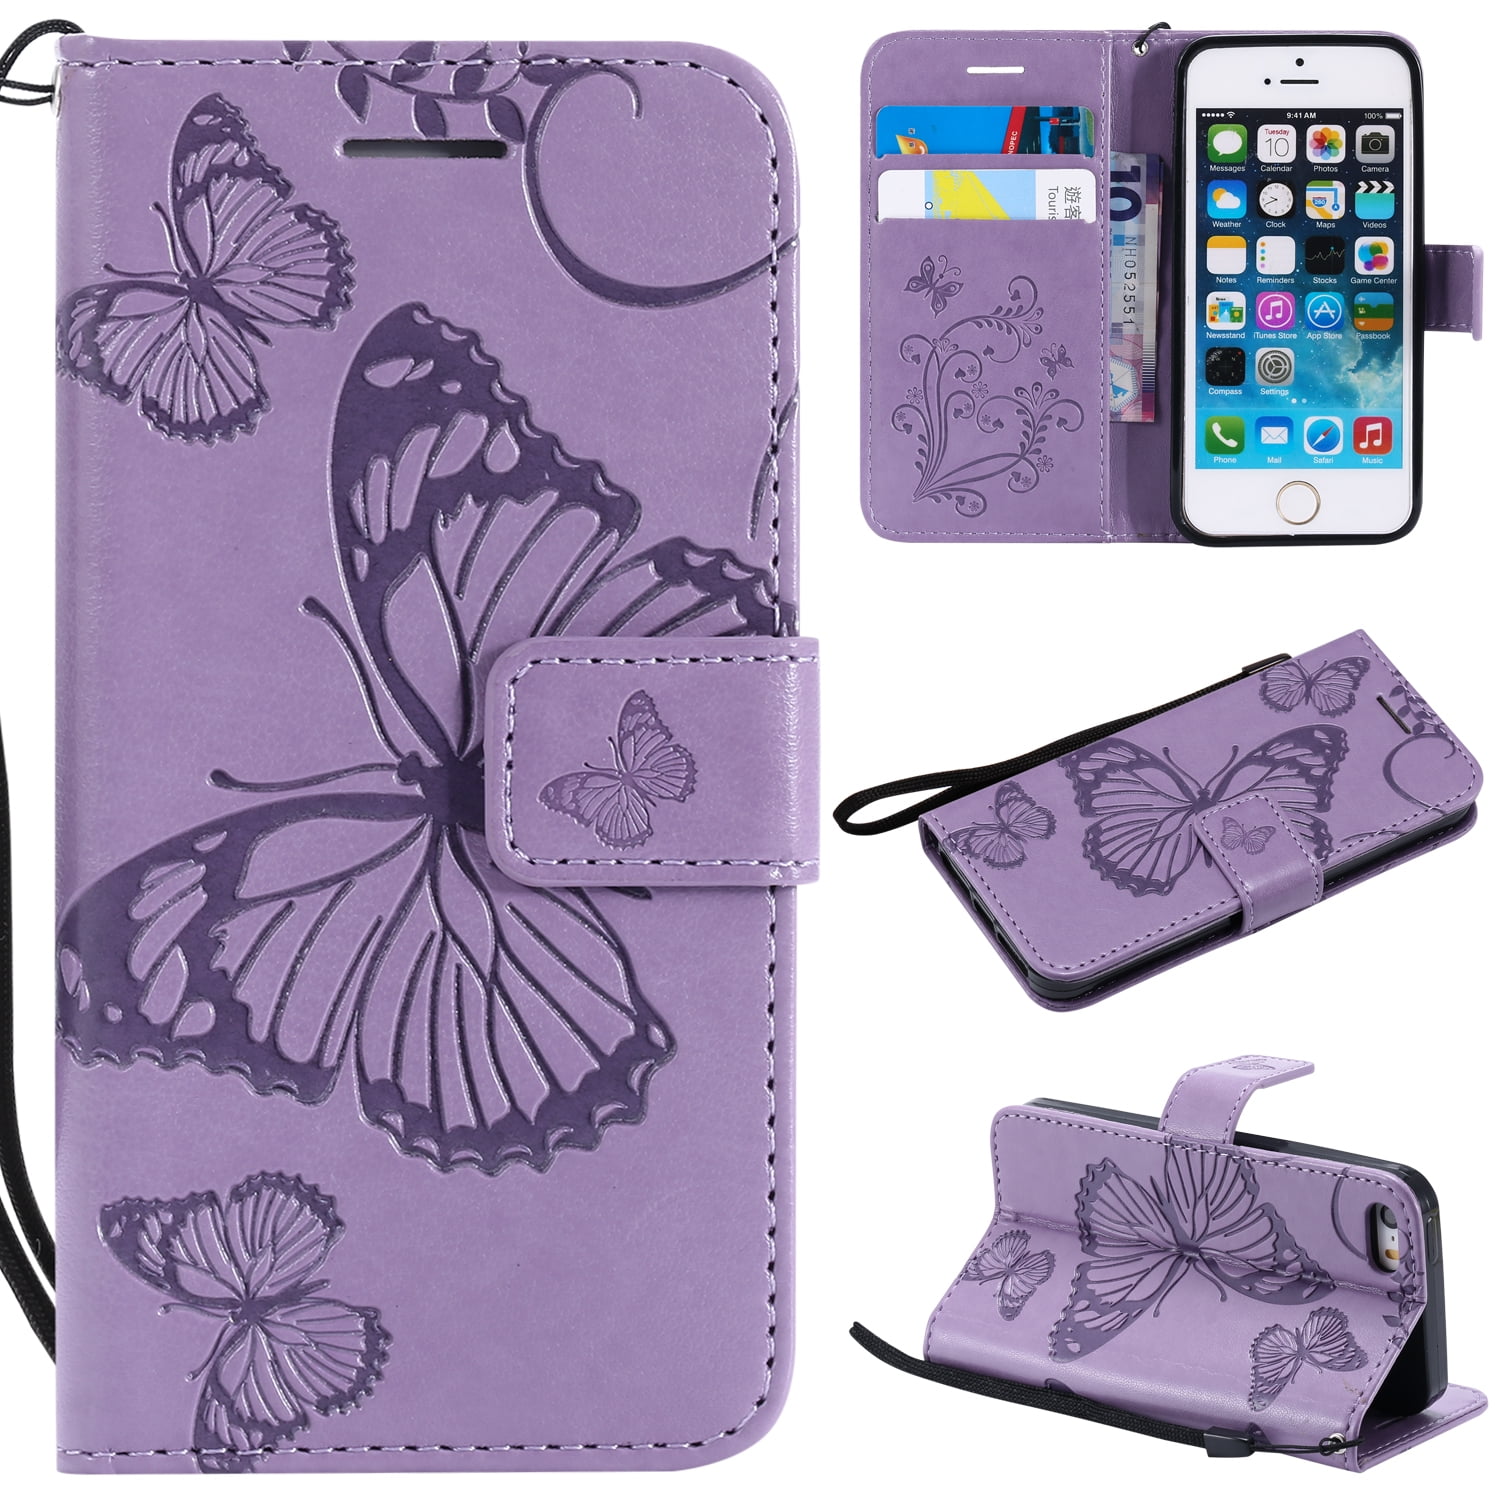 Dressoir Classificeren verlangen iPhone 5S Case,iPhone 5 Case,iPhone SE(2016） Wallet case, Allytech Pretty  Retro Embossed Butterfly Flower Design Pu Leather Book Style Wallet Flip  Case Cover for Apple iPhone 5/ 5S /SE(2016）, Purple - Walmart.com